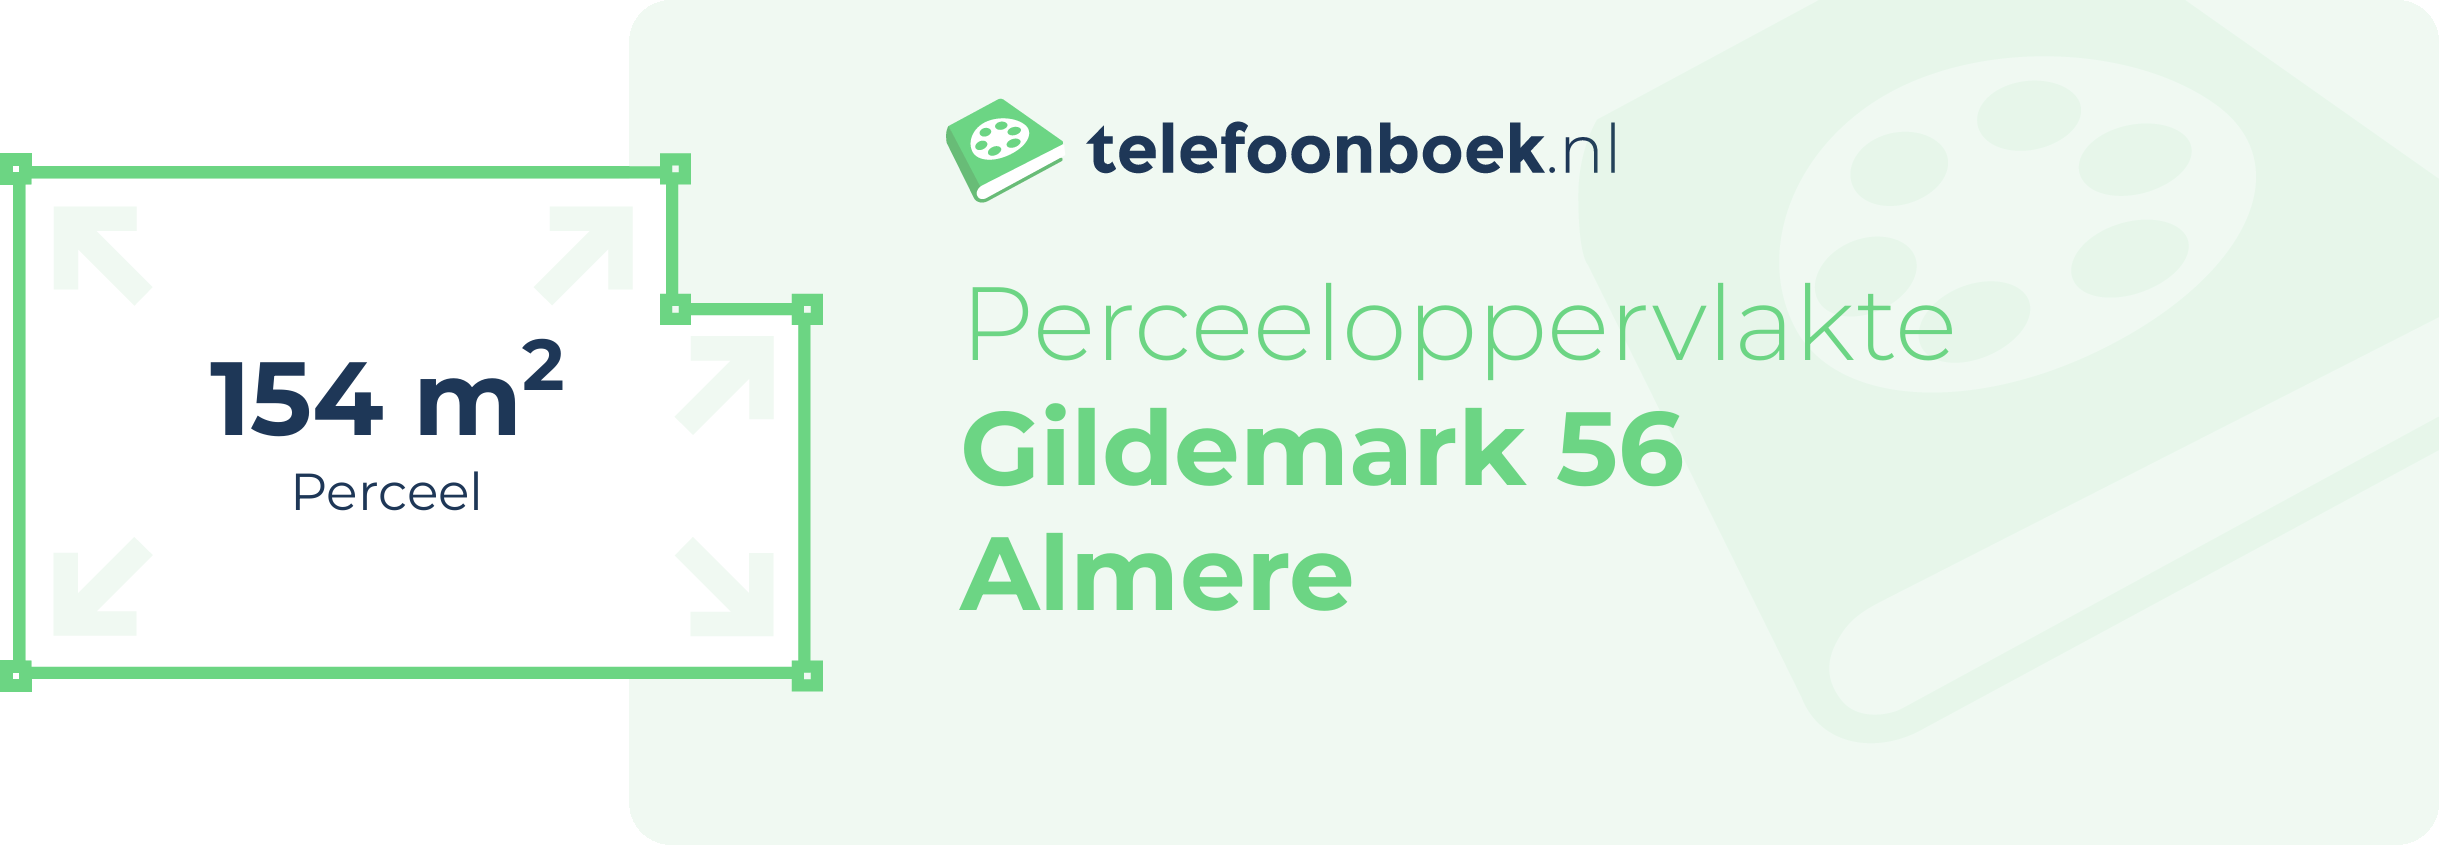 Perceeloppervlakte Gildemark 56 Almere